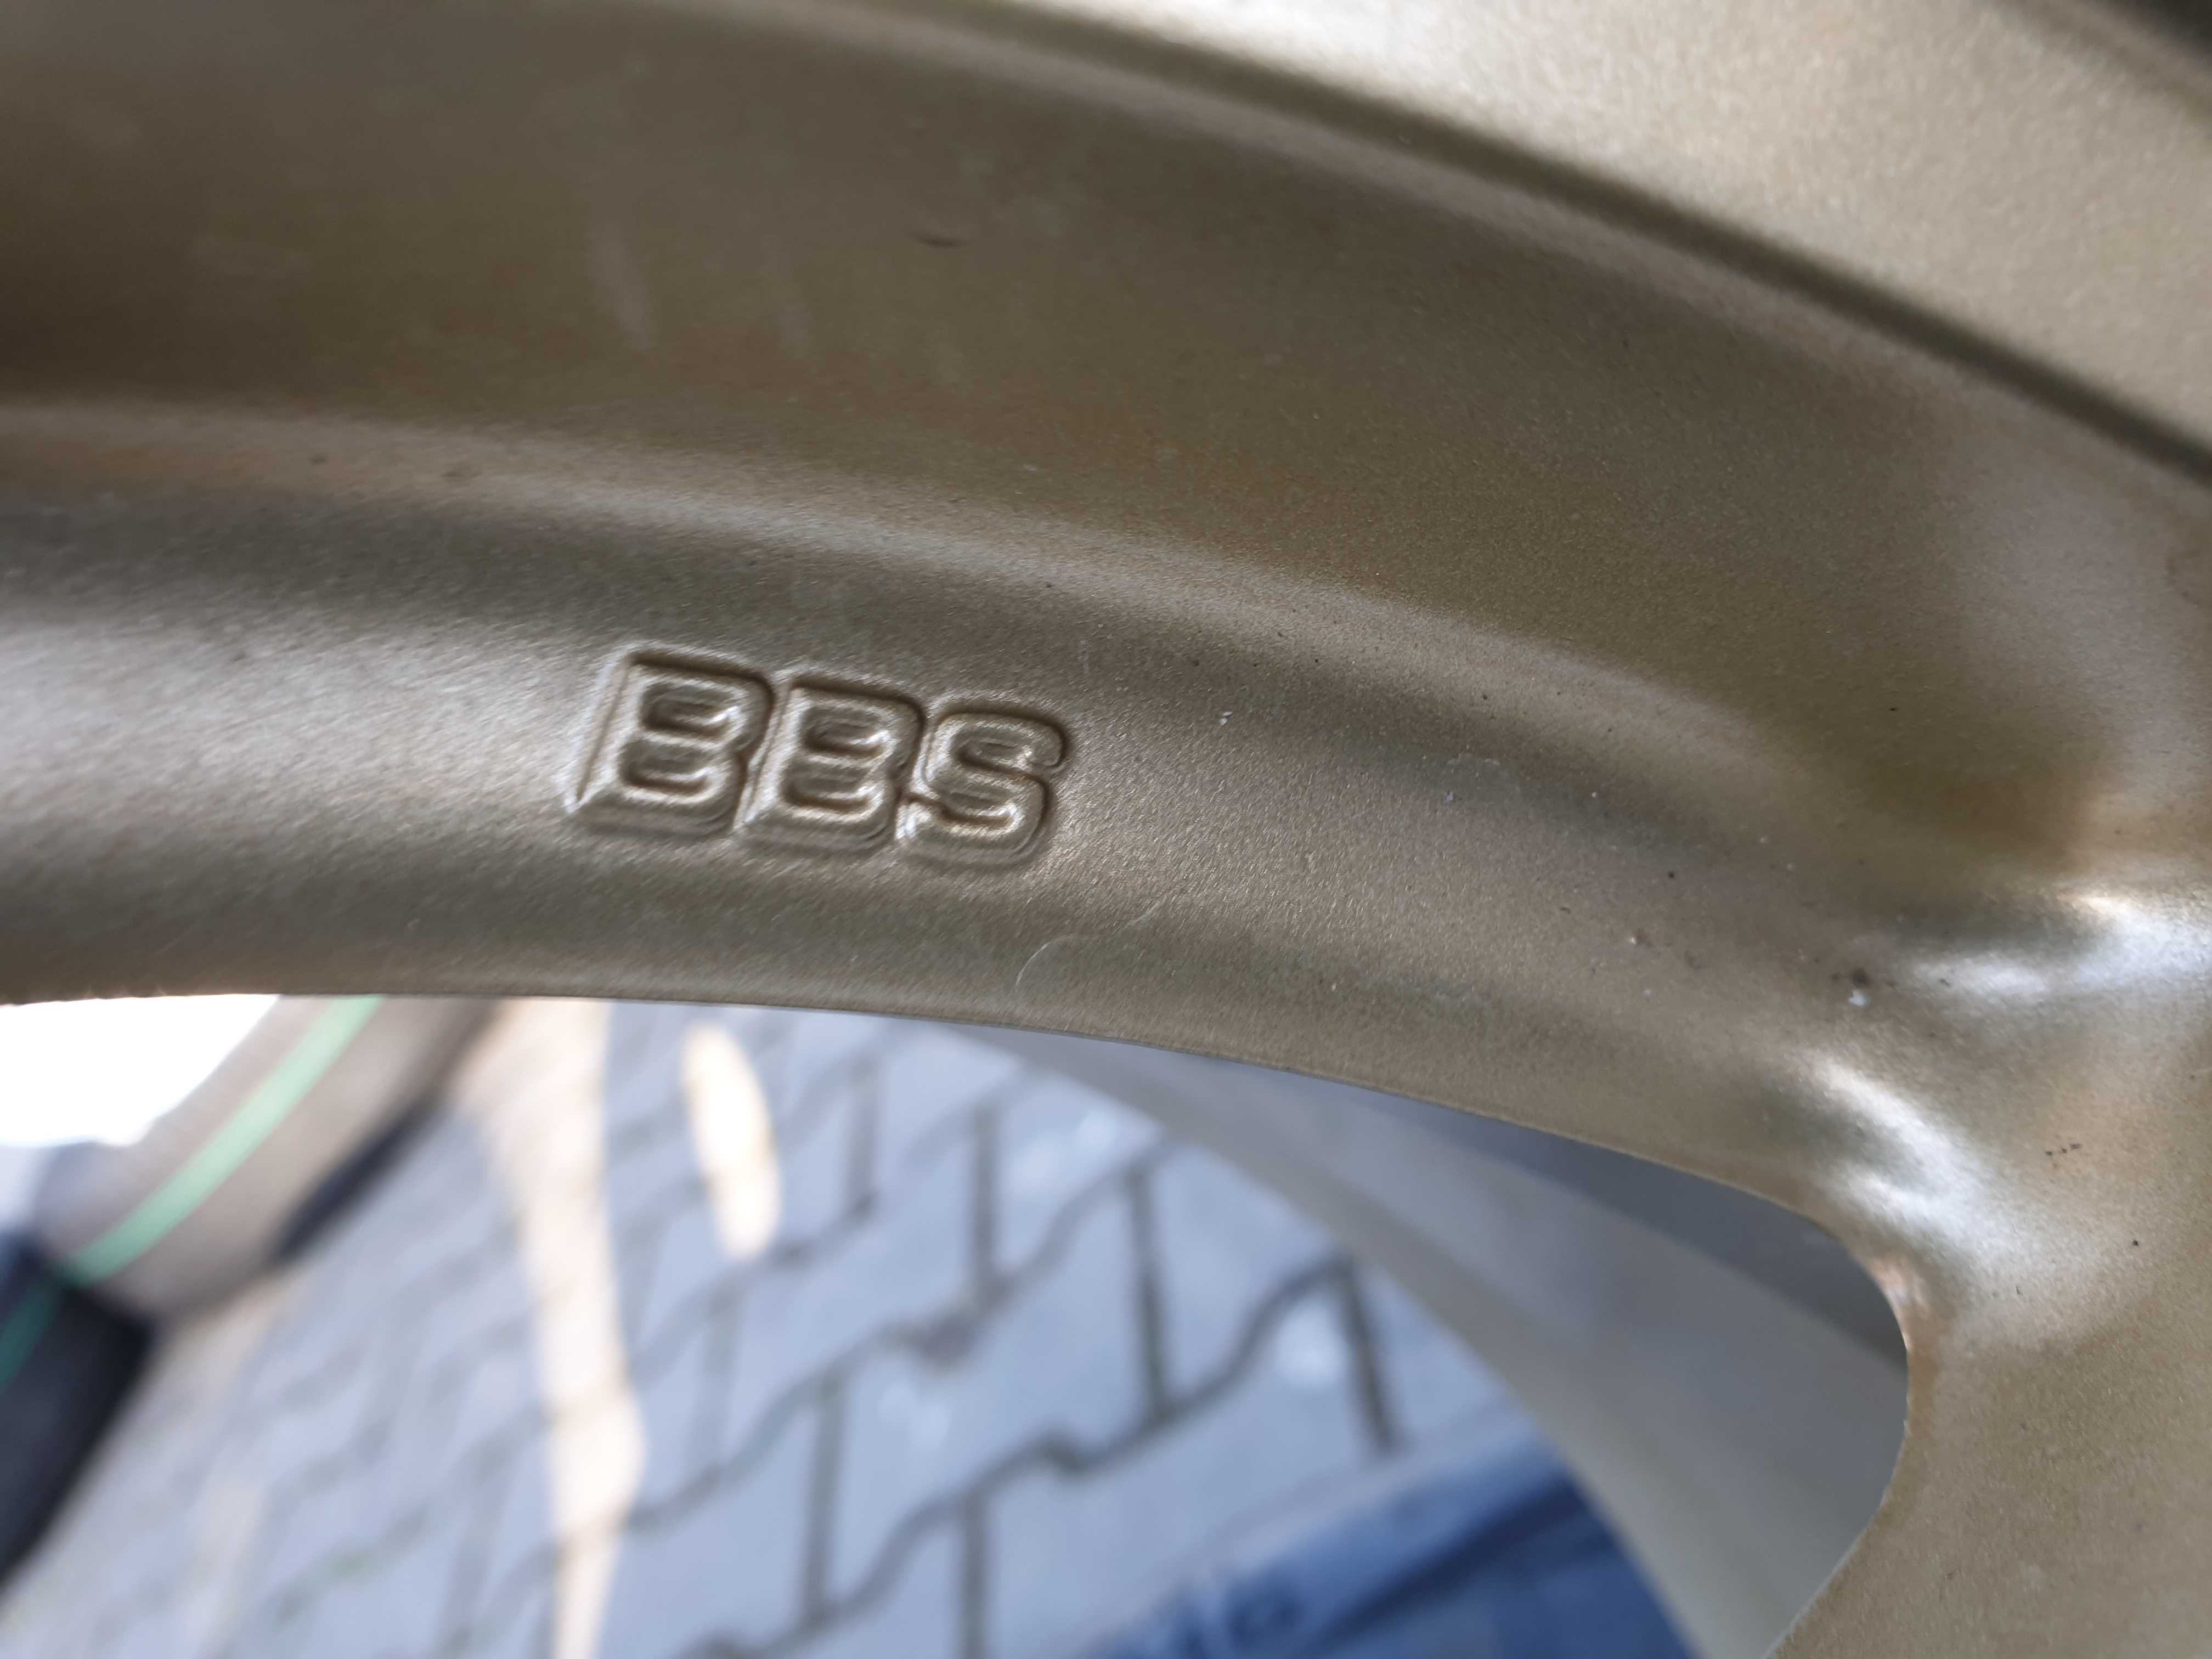 Felgi aluminiowe BBS 17" 7,5j 5x112 et35 Bmw Audi Skoda Vw Seat itp.